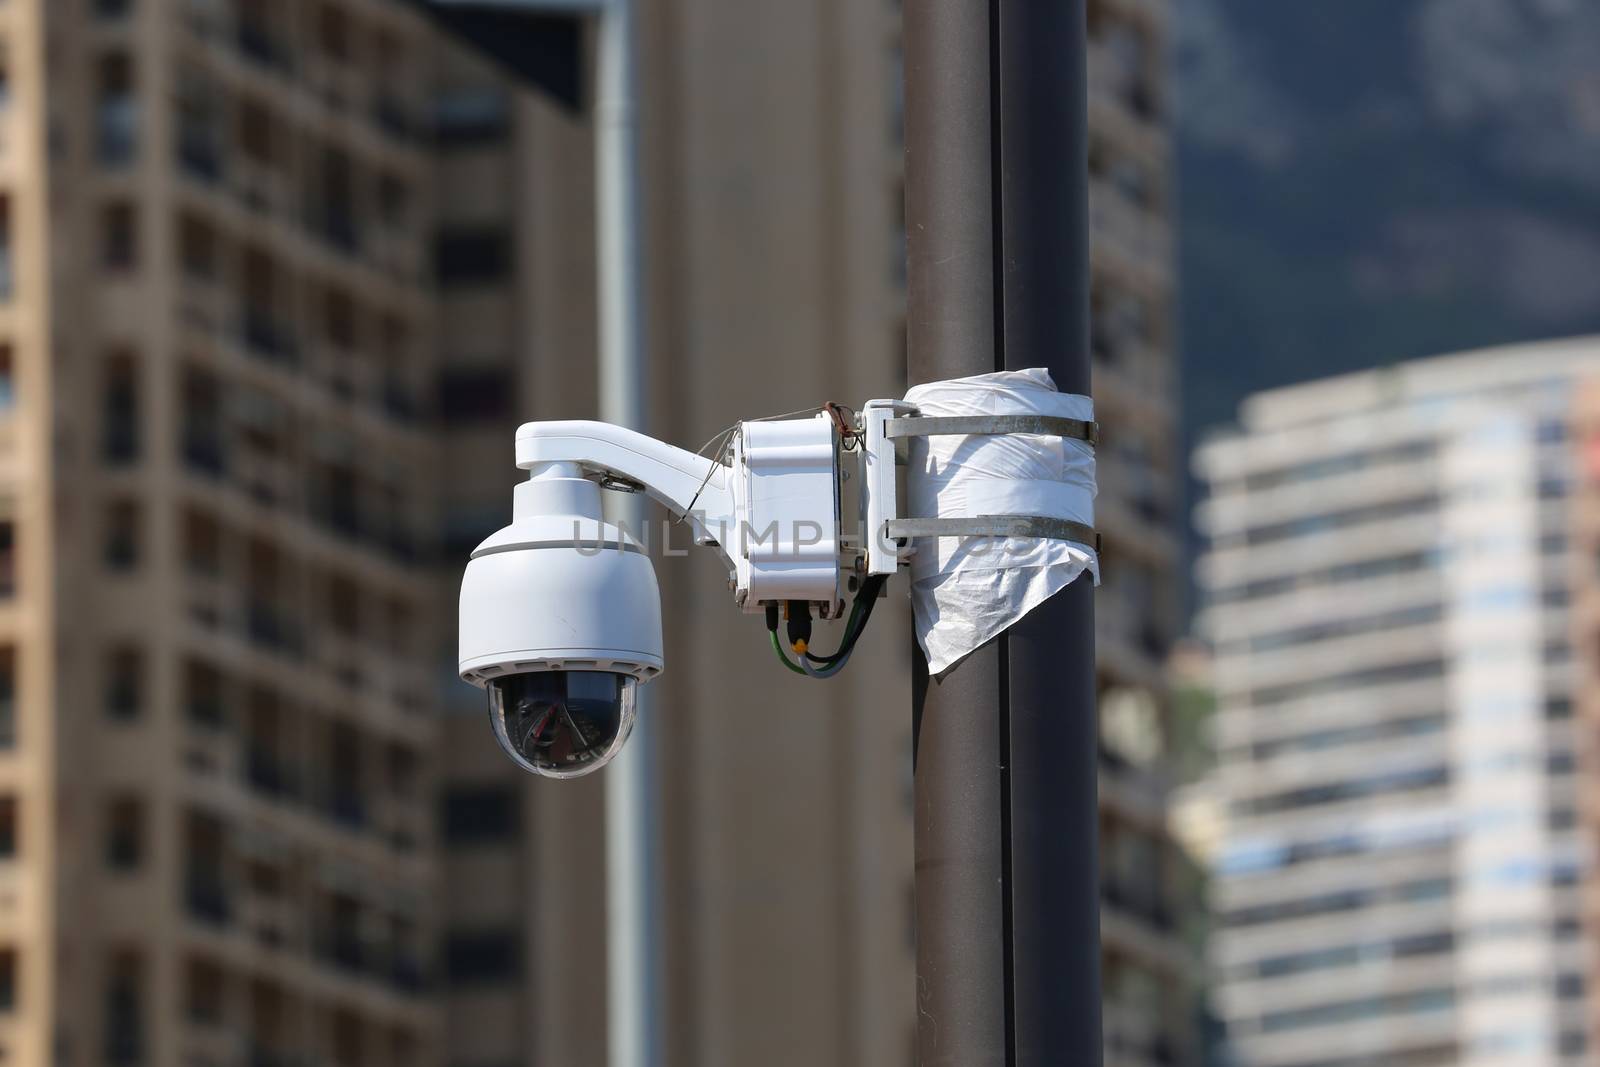 Dome Type Outdoor CCTV Camera on Street Lamp in Monte-carlo, Monaco